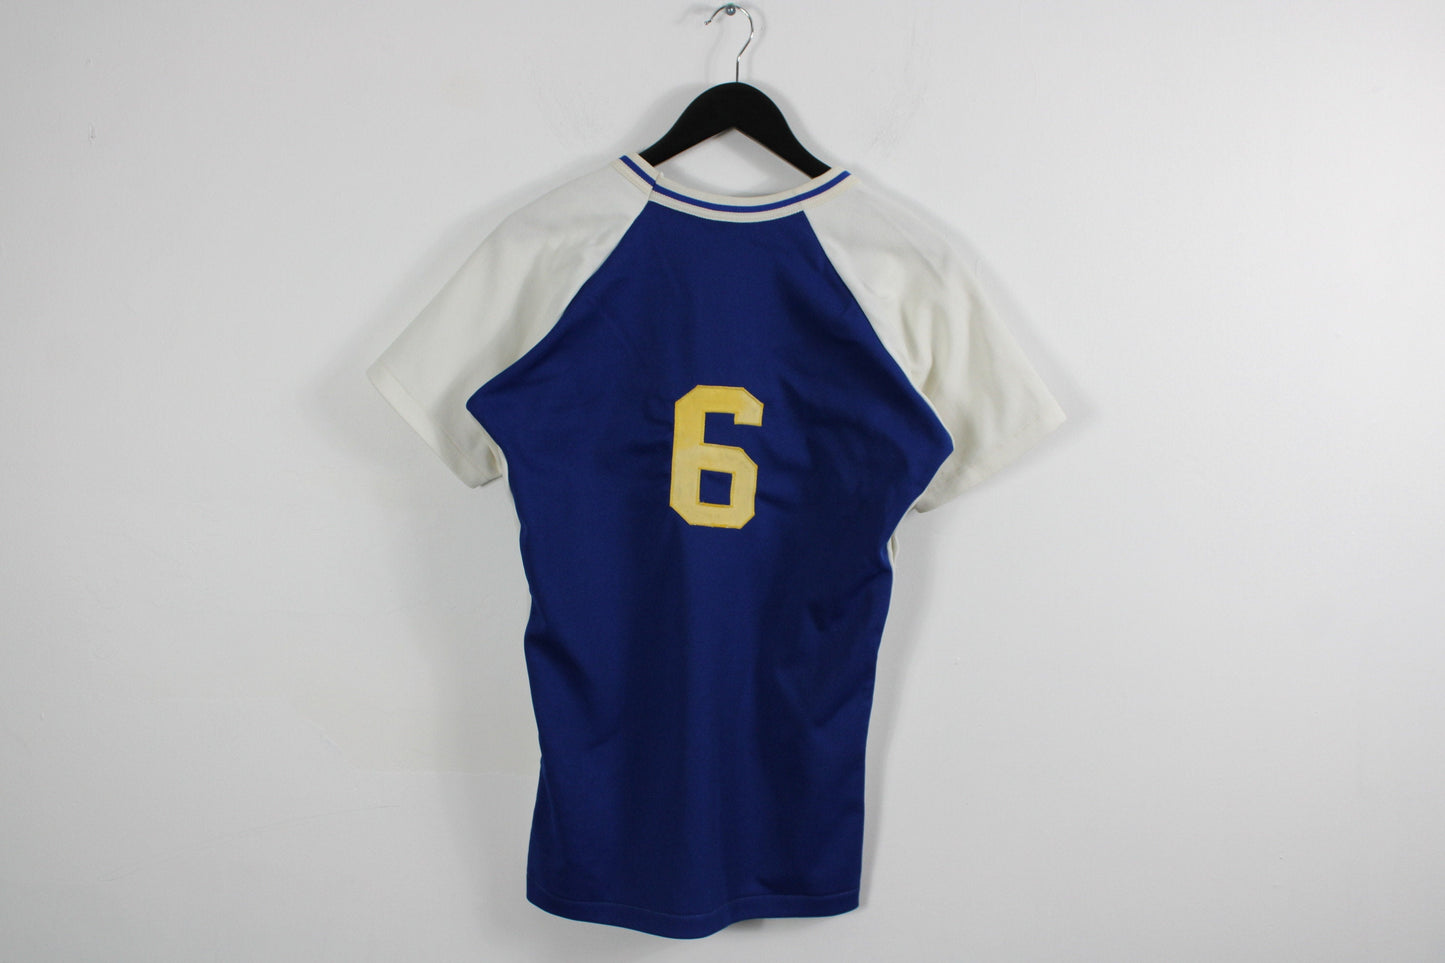 American-Football Jersey / Vintage Blue Wash Shirt / 90s Sports Team Uniform